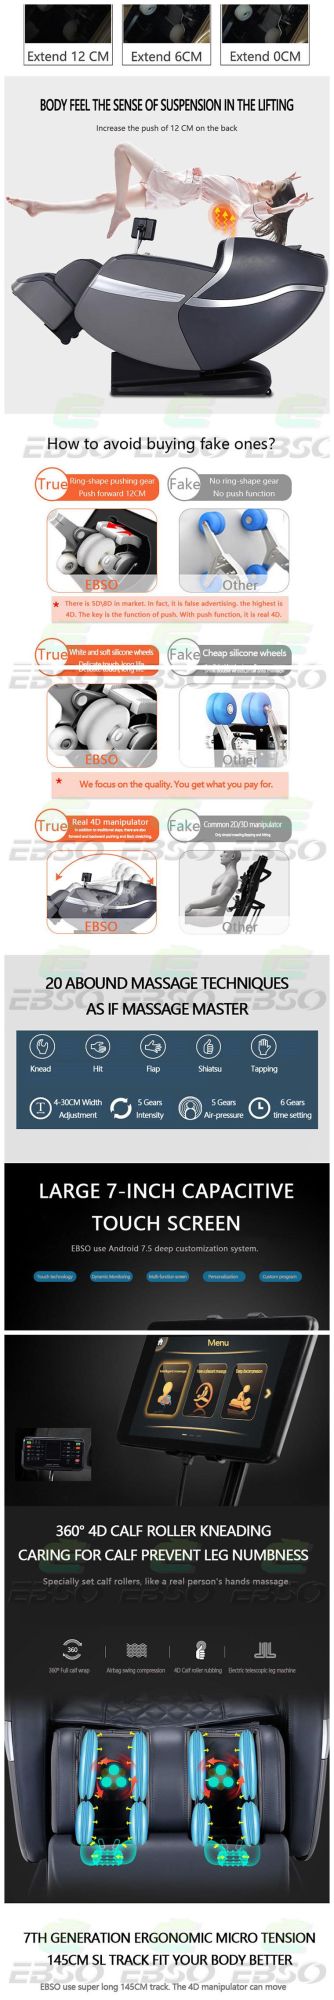 4D Full Body Massage Chair with Zero Gravity